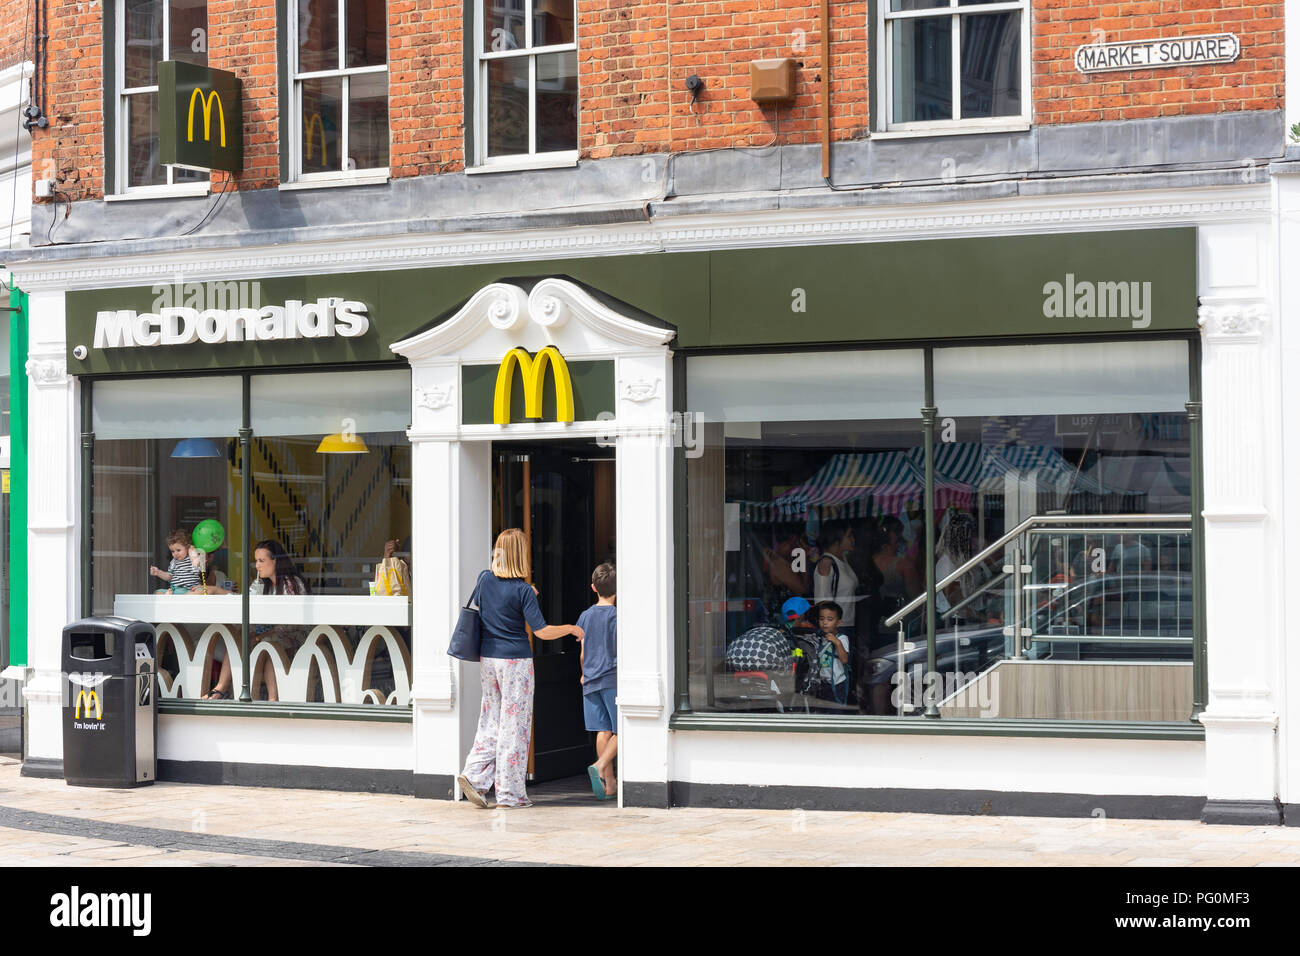 McDonald's Fast Food Restaurant, Market Square, High Street, Bromley, London Borough von Bromley, Greater London, England, Vereinigtes Königreich Stockfoto